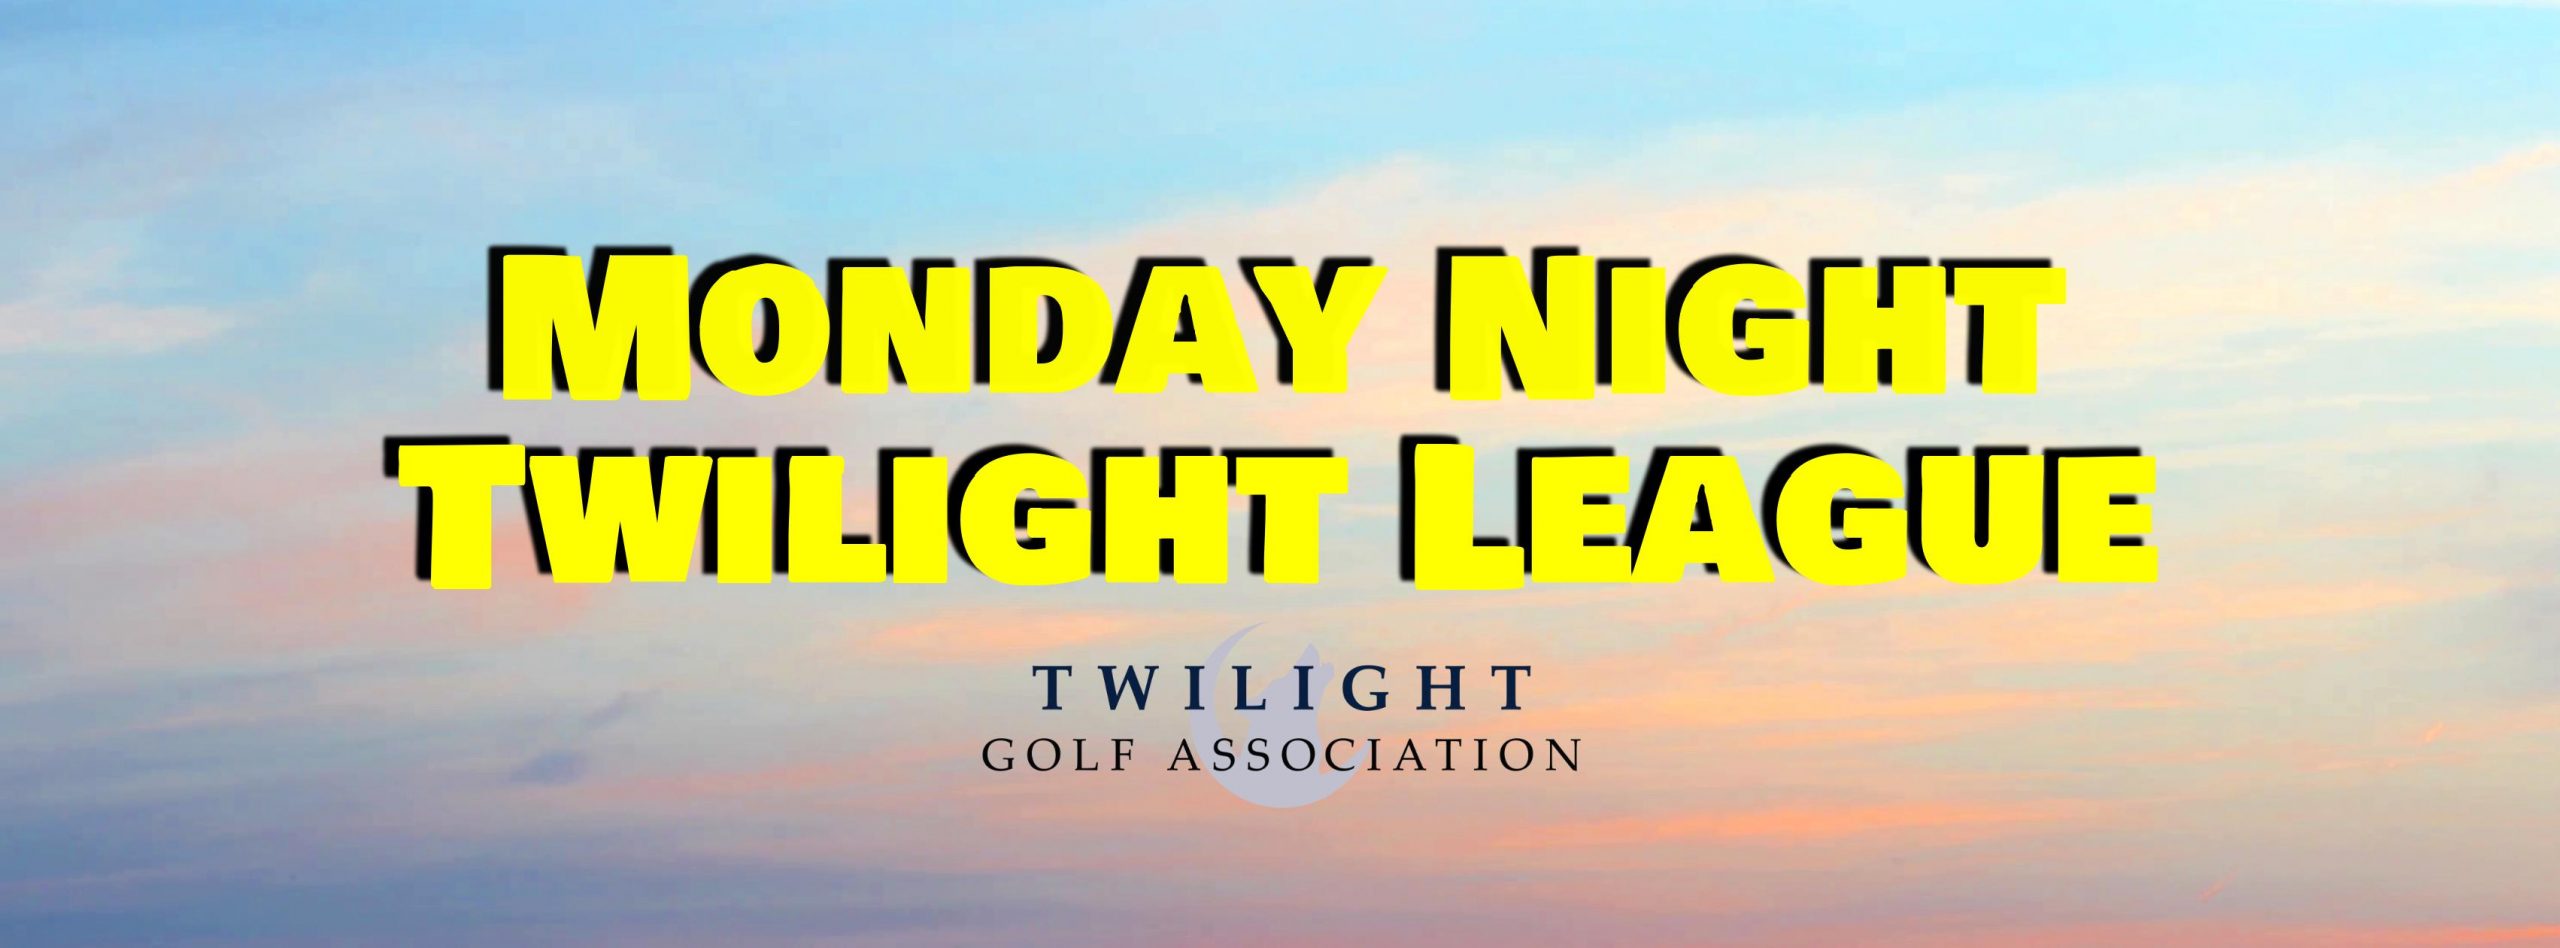 Monday Night Twilight League at Wyncote Golf Club